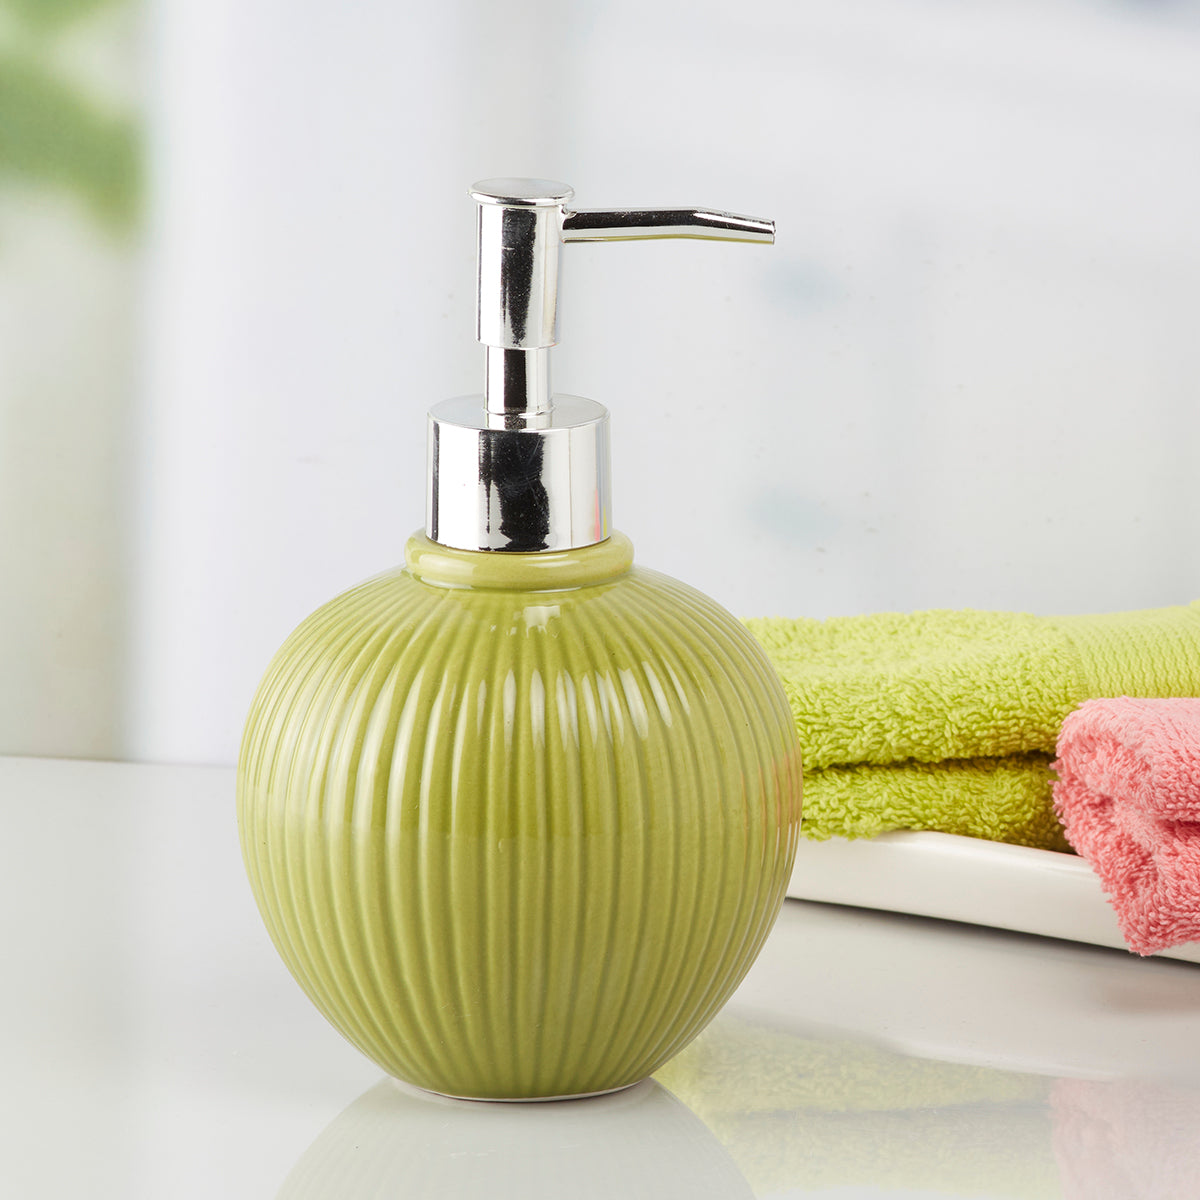 Ceramic Soap Dispenser handwash Pump for Bathroom, Set of 1, Green (8049)